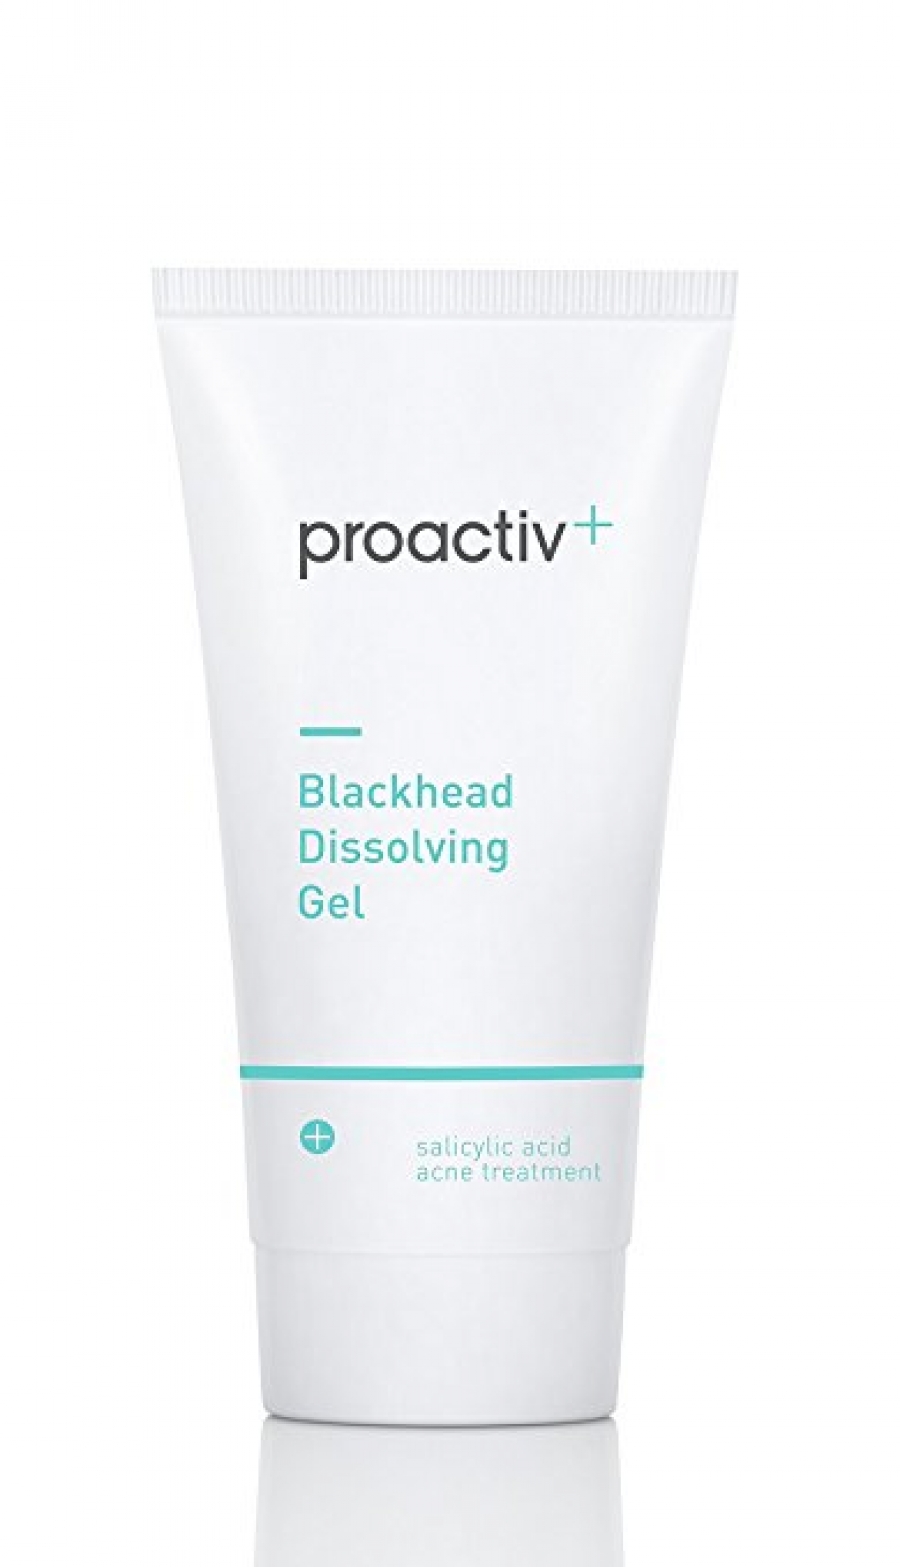 Get rid of blackhead - complete blackhead solution